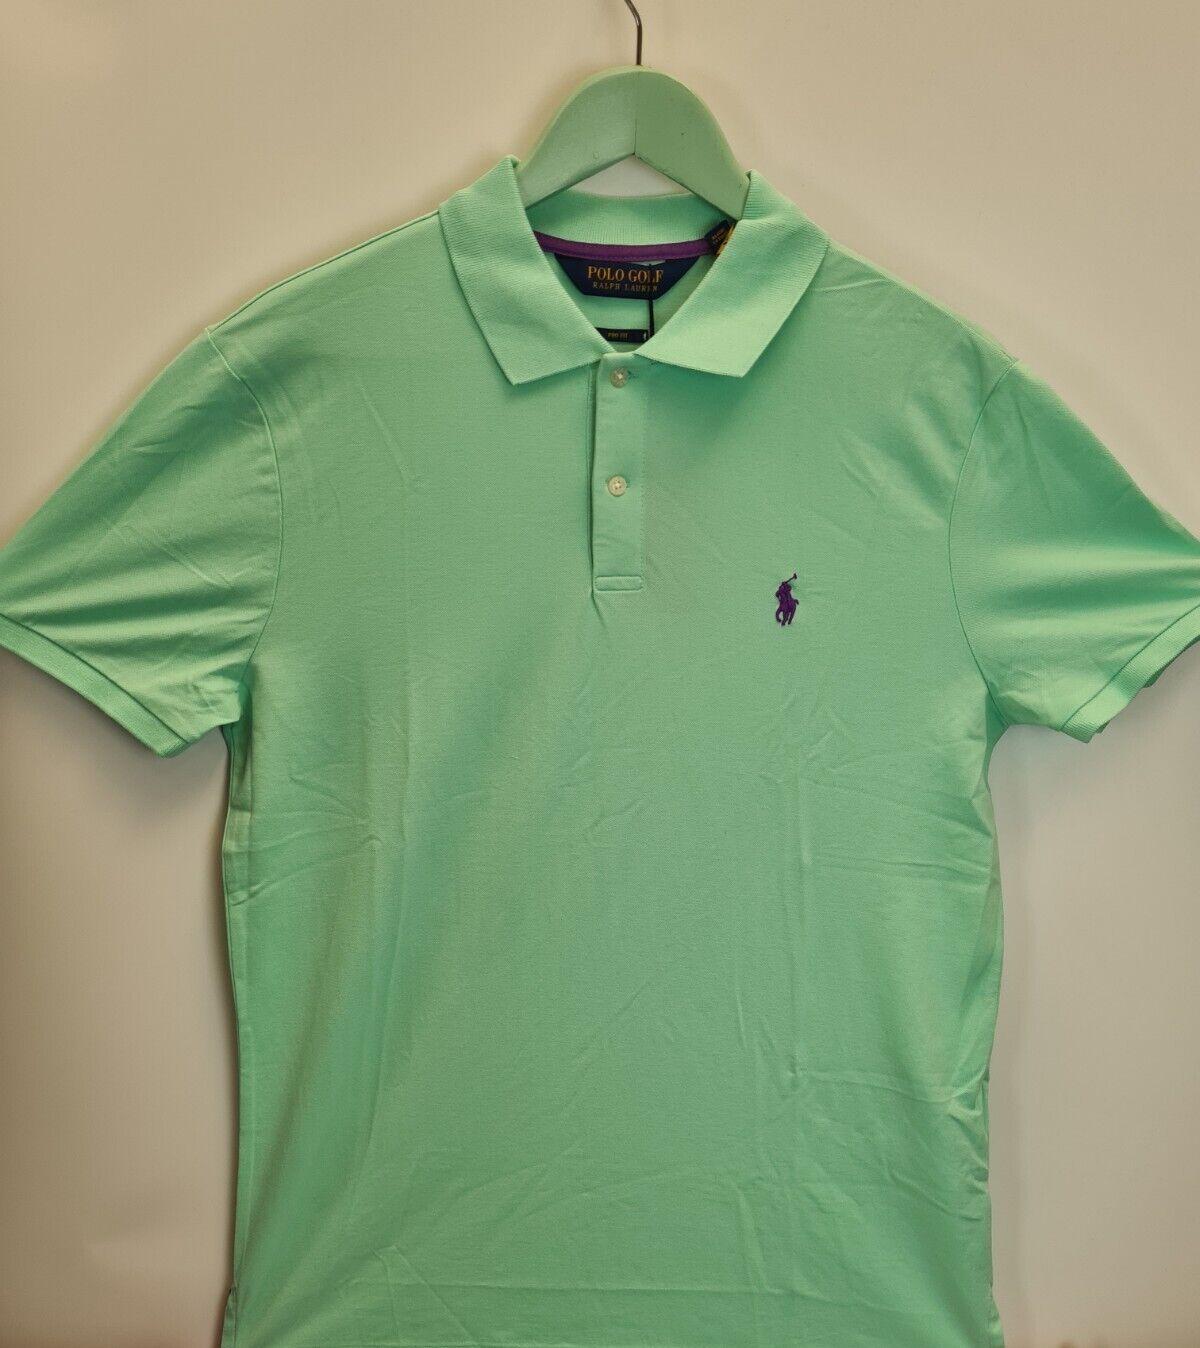 Polo Golf New Englandprep Blue ss kc Pro Fit Tshirt Size M****Ref V233